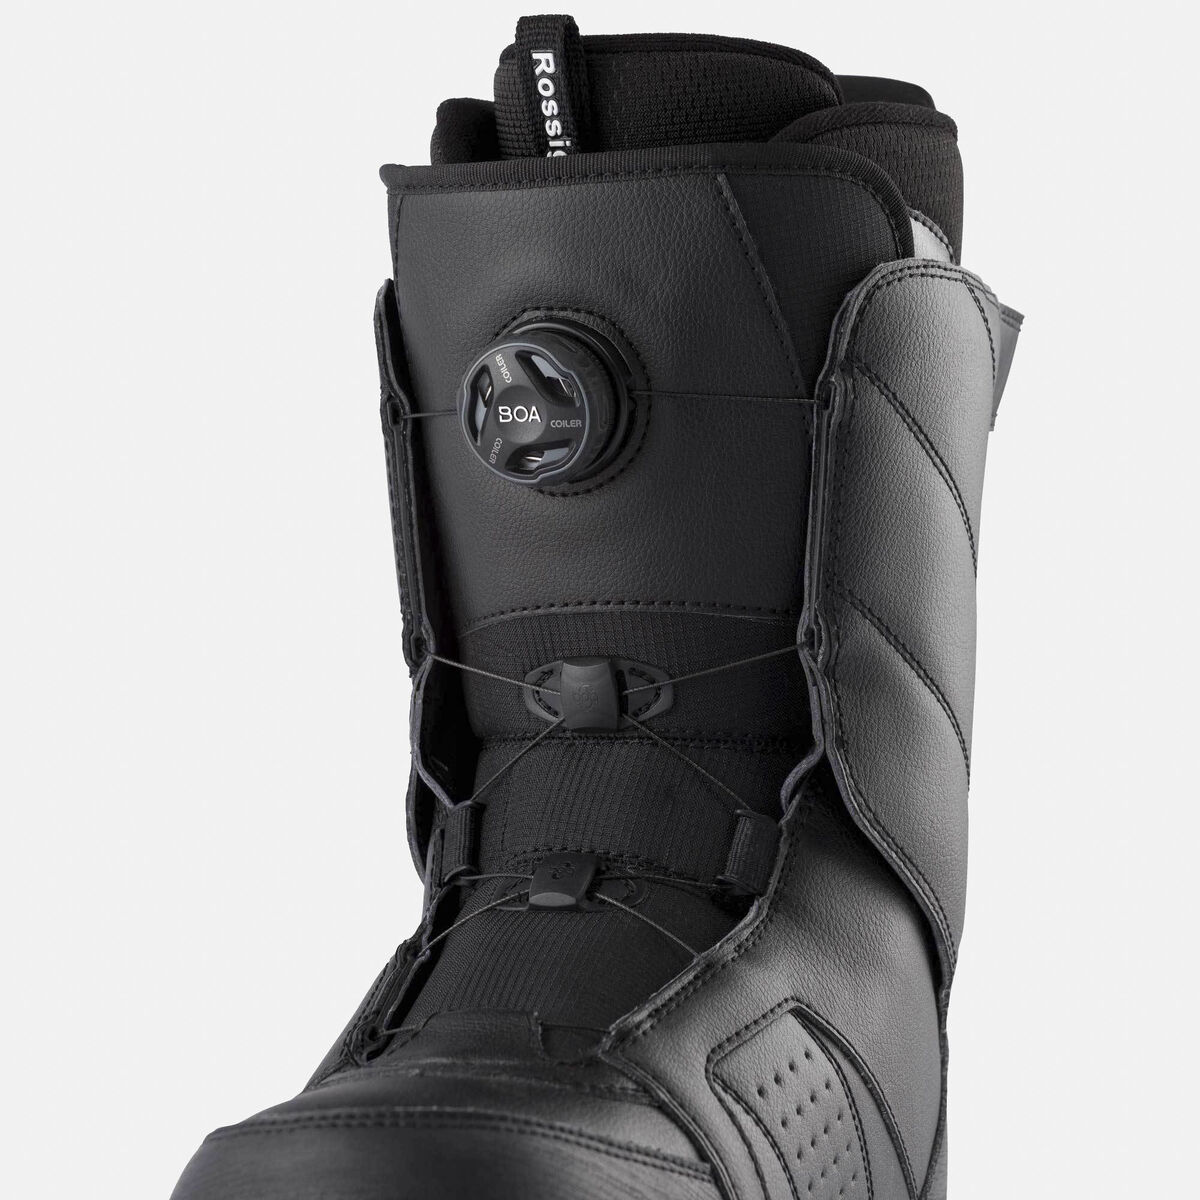 Men's Rossignol Crank BOA® H4 snowboard boot